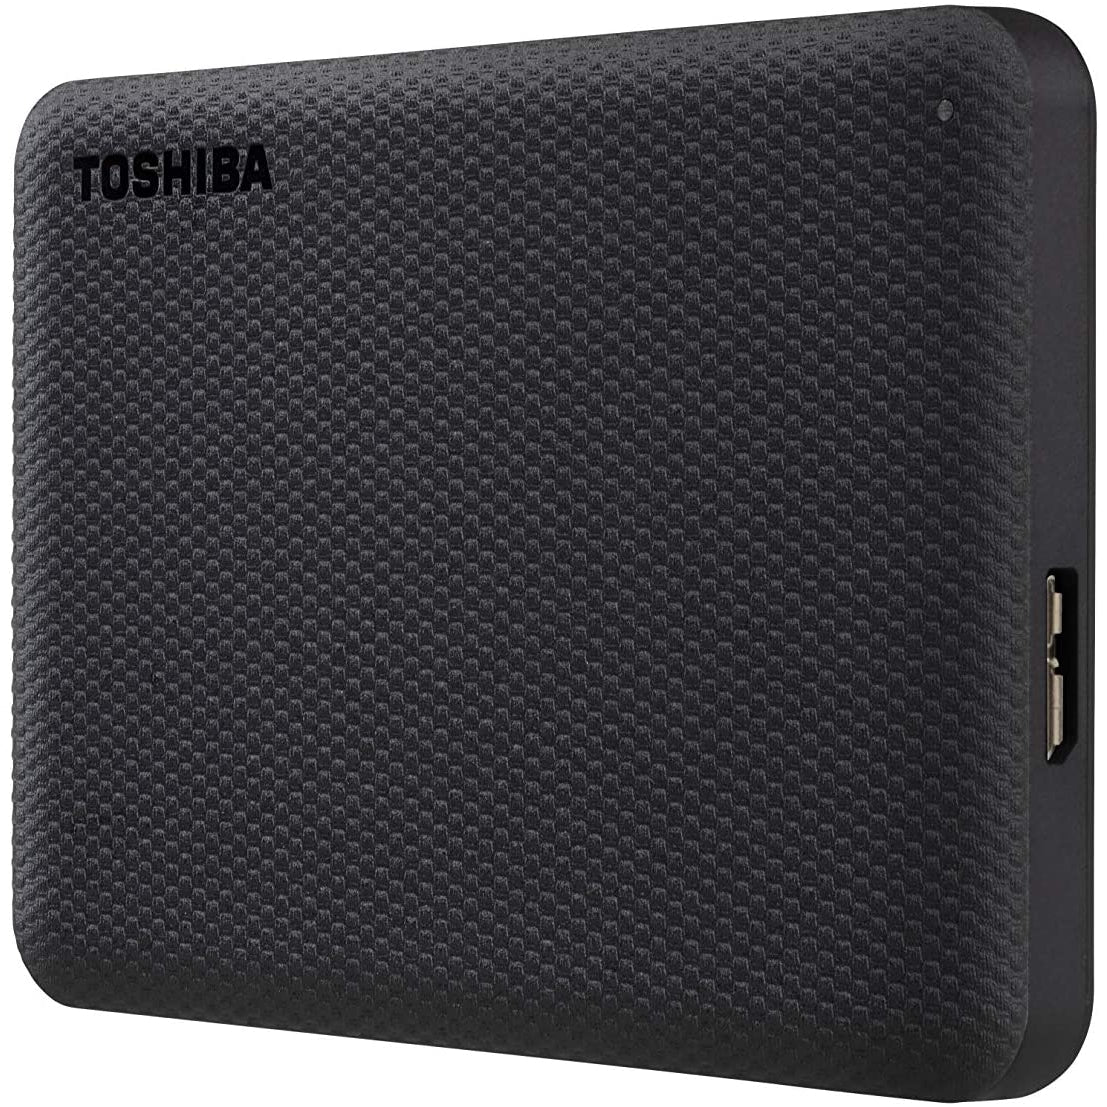 Toshiba Canvio Advance 1TB Portable External Hard Drive USB 3.0, Black - Refurbished Excellent